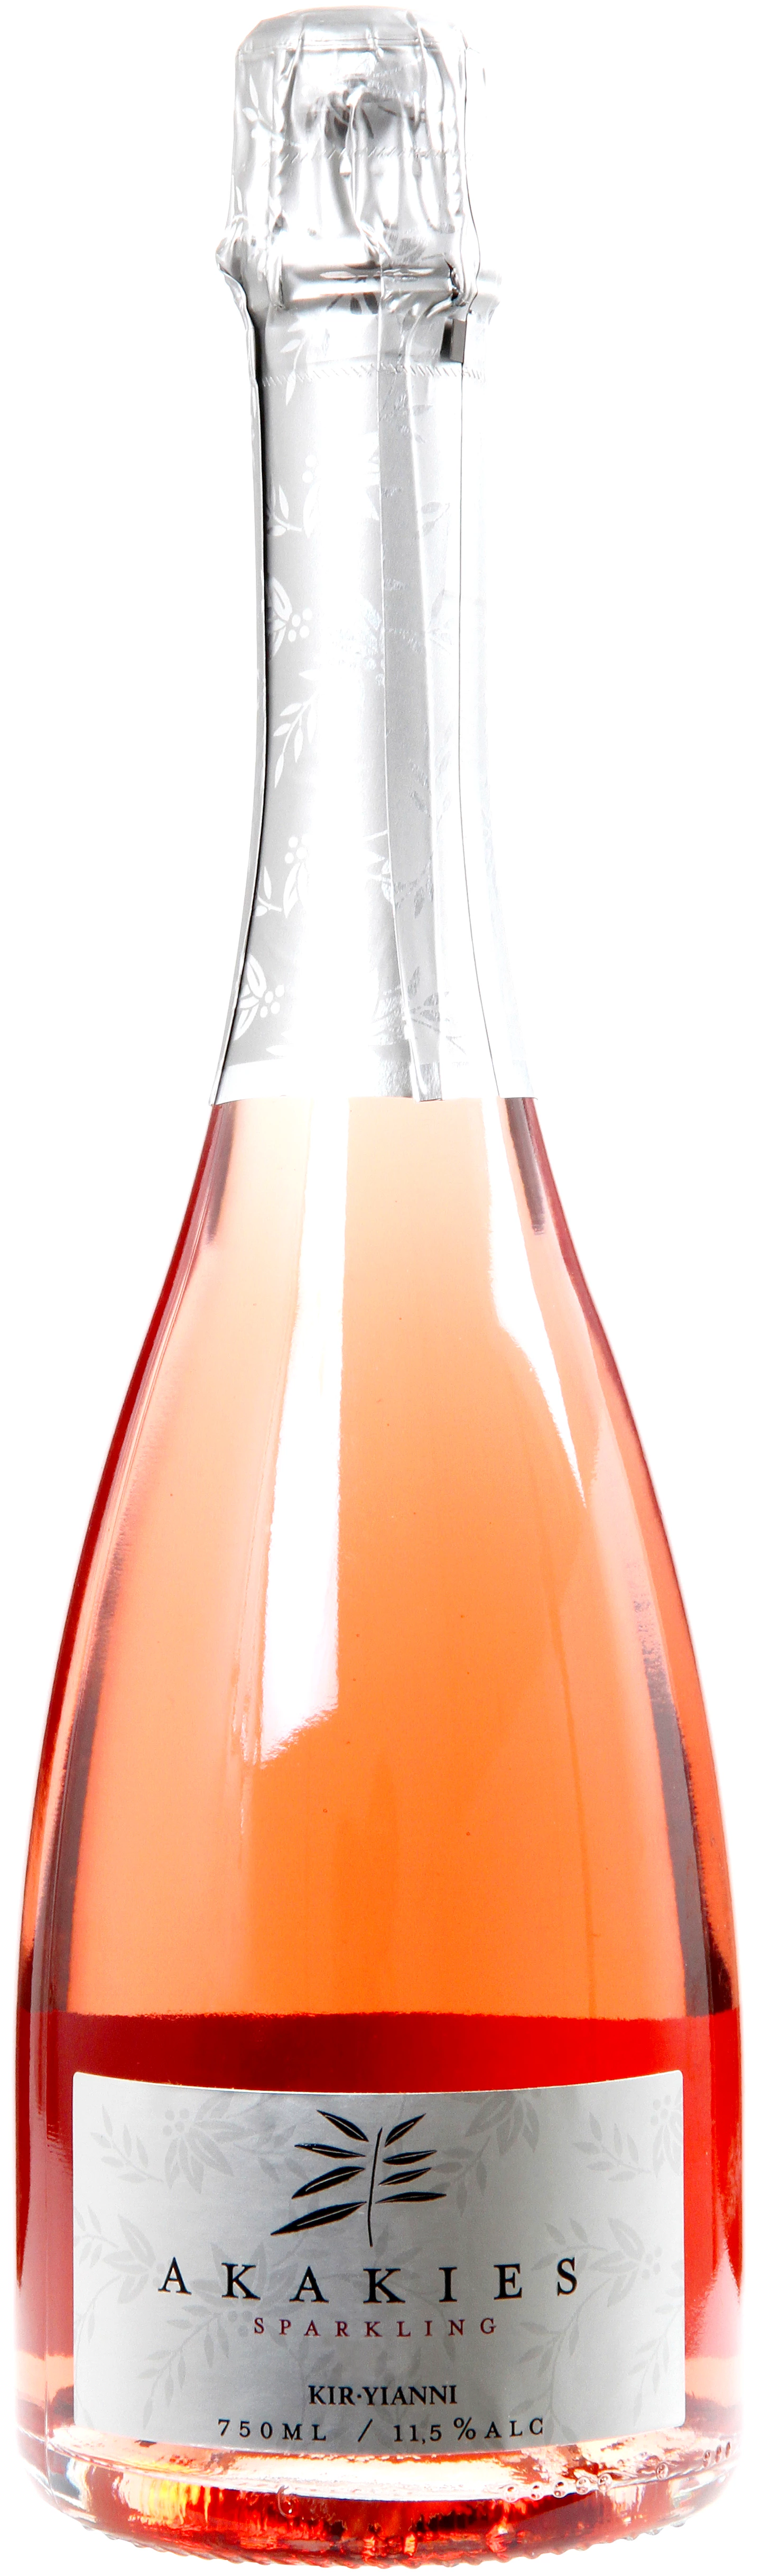 Løgismose Mousserende Kir Yianni Akakies Sparkling Rosé 2016 - 207476